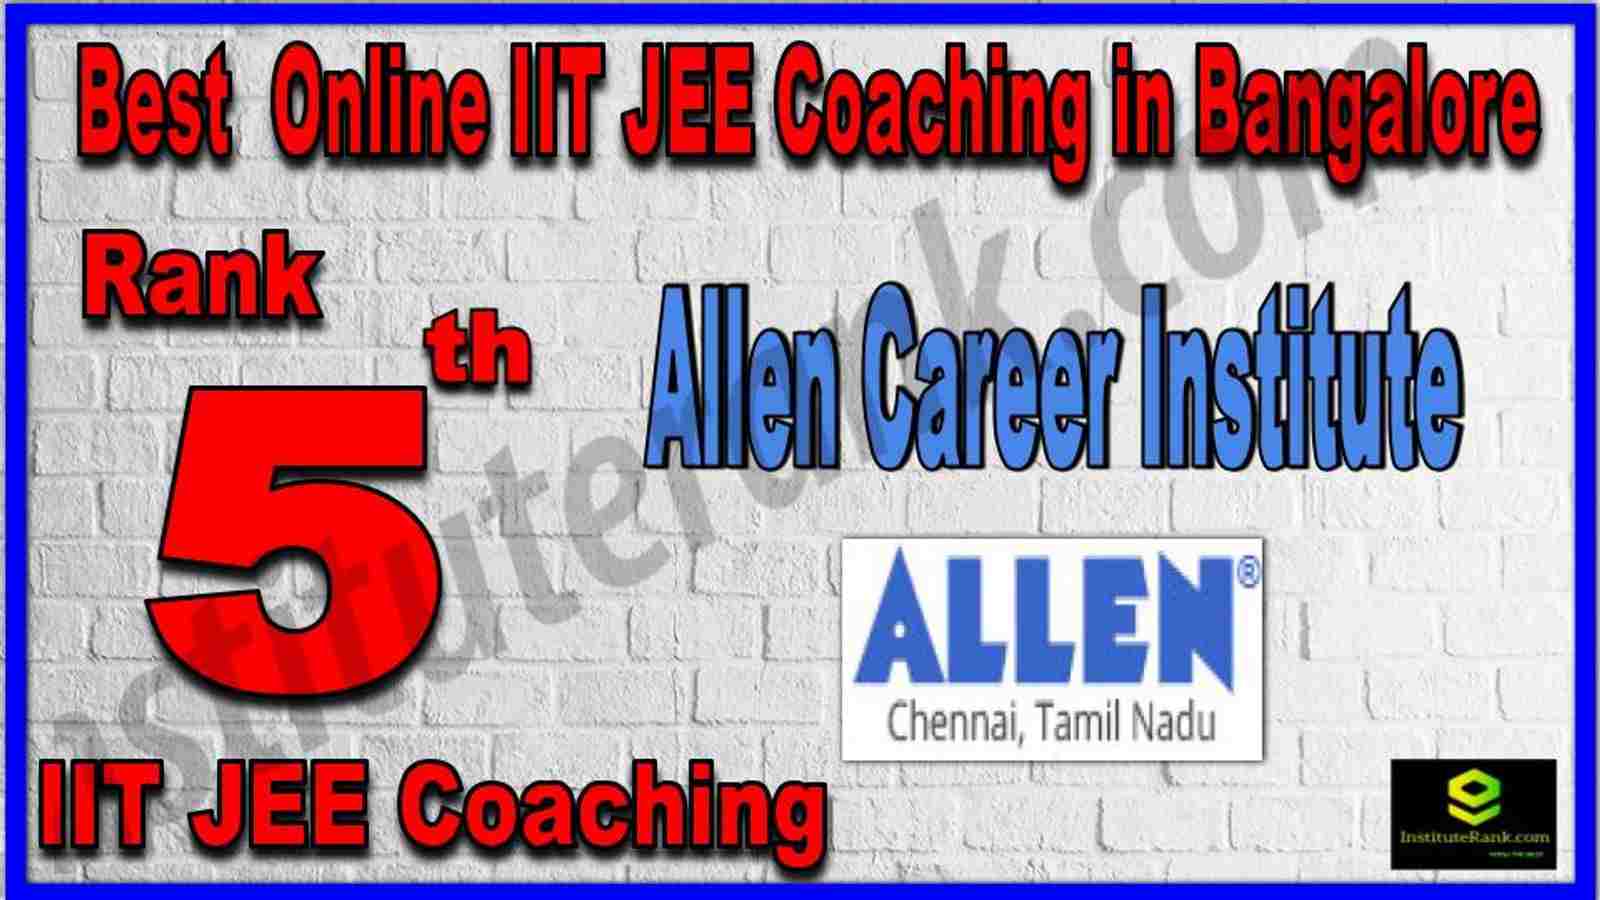 Rank 5th Best Online IIT JEE Coaching in Bangalore